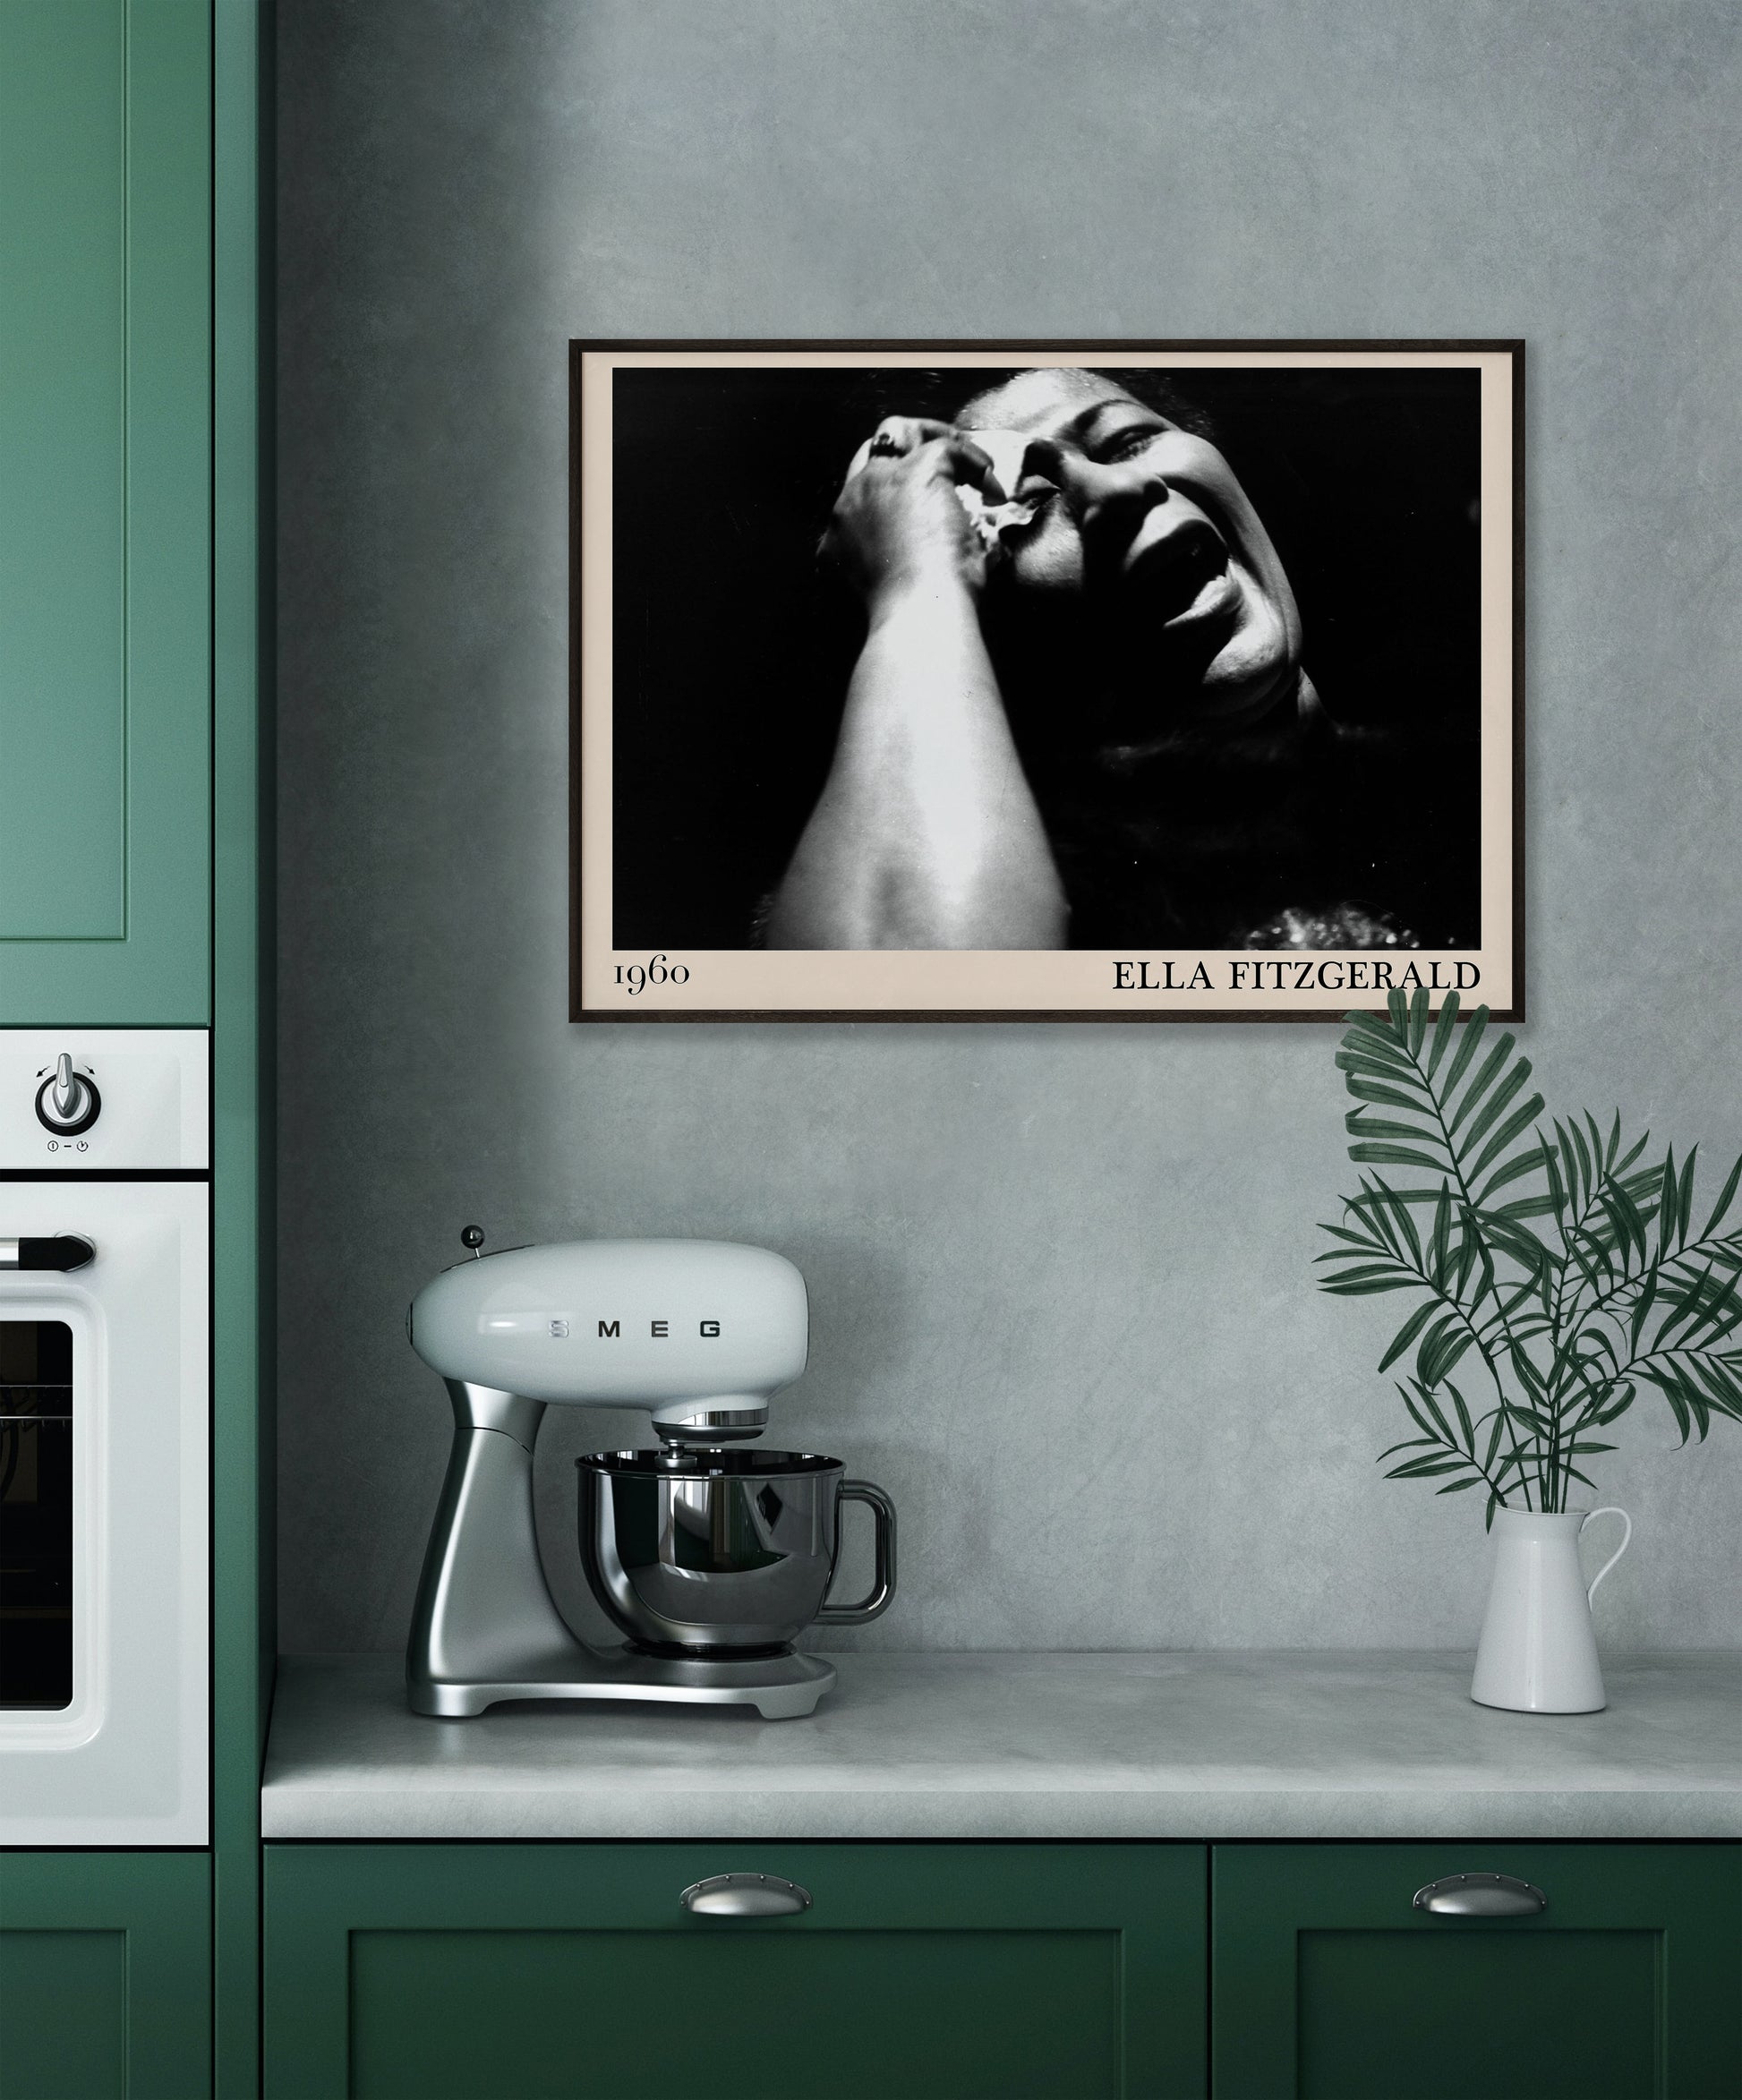 Framed kitchen A2 jazz poster of Ella Fitzgerald